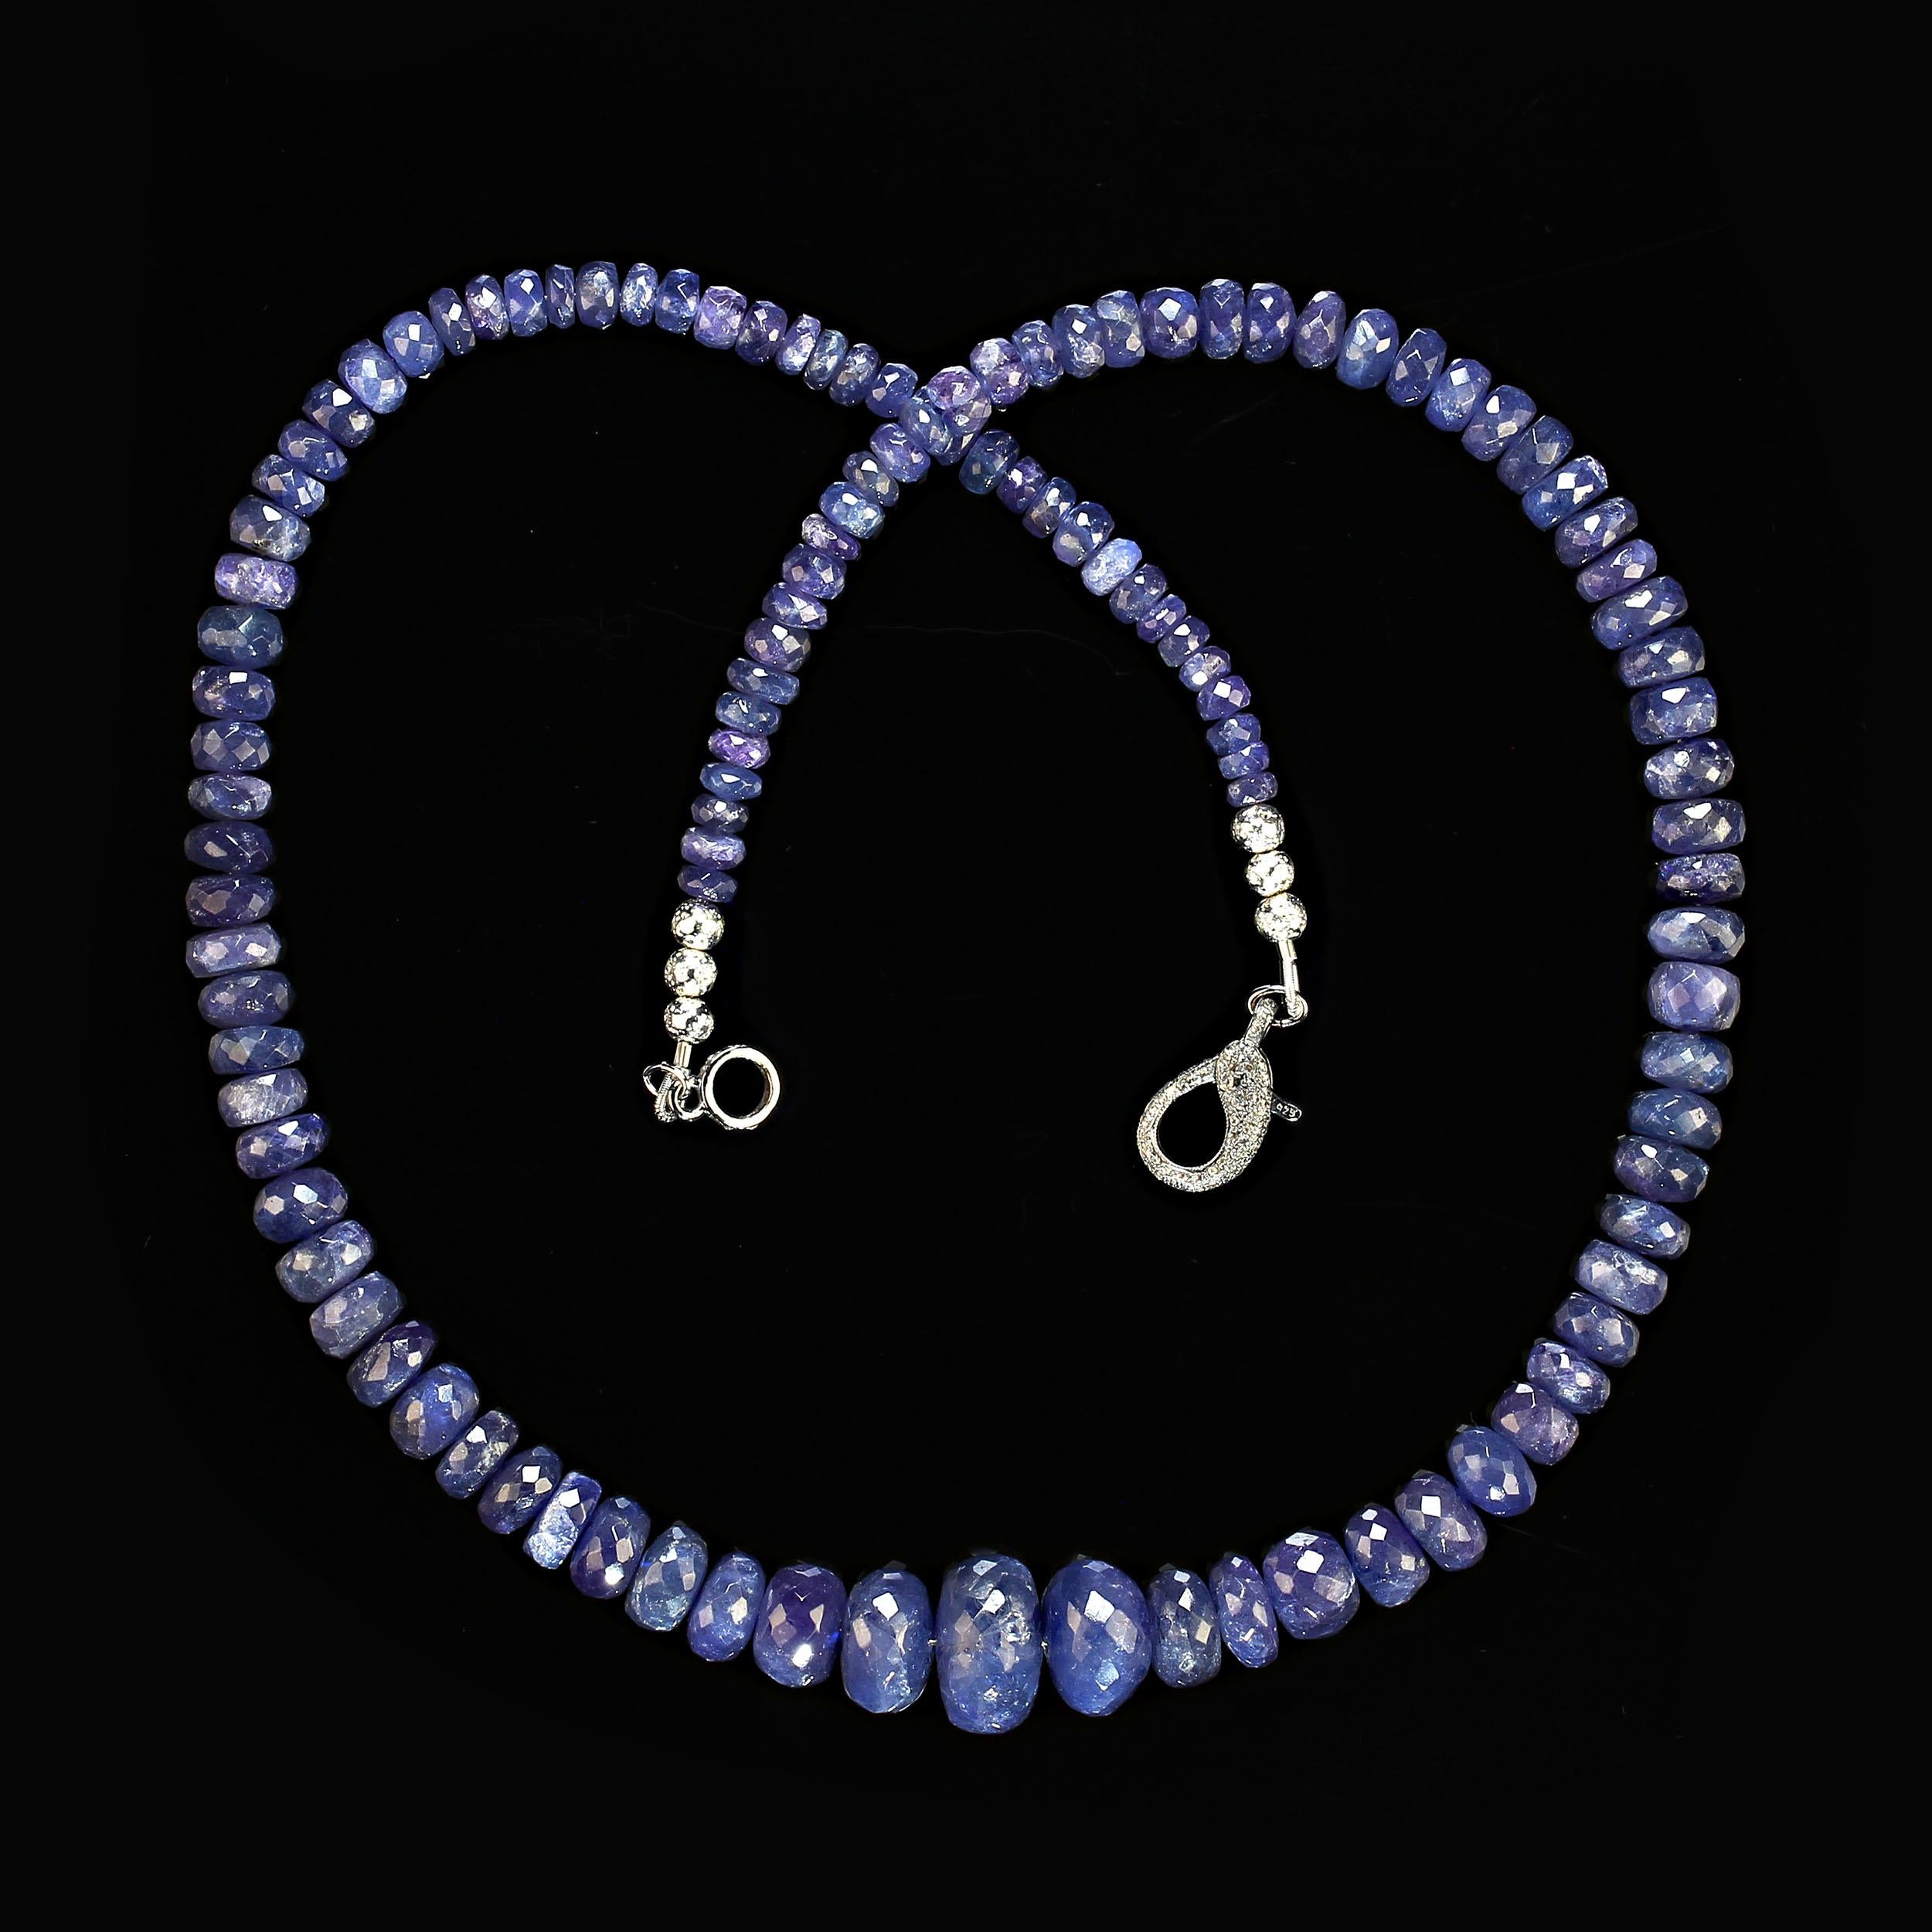 Women's or Men's Terrific Tanzanite necklace graduated 23 inch purple/blue rondelles Great Gift! For Sale